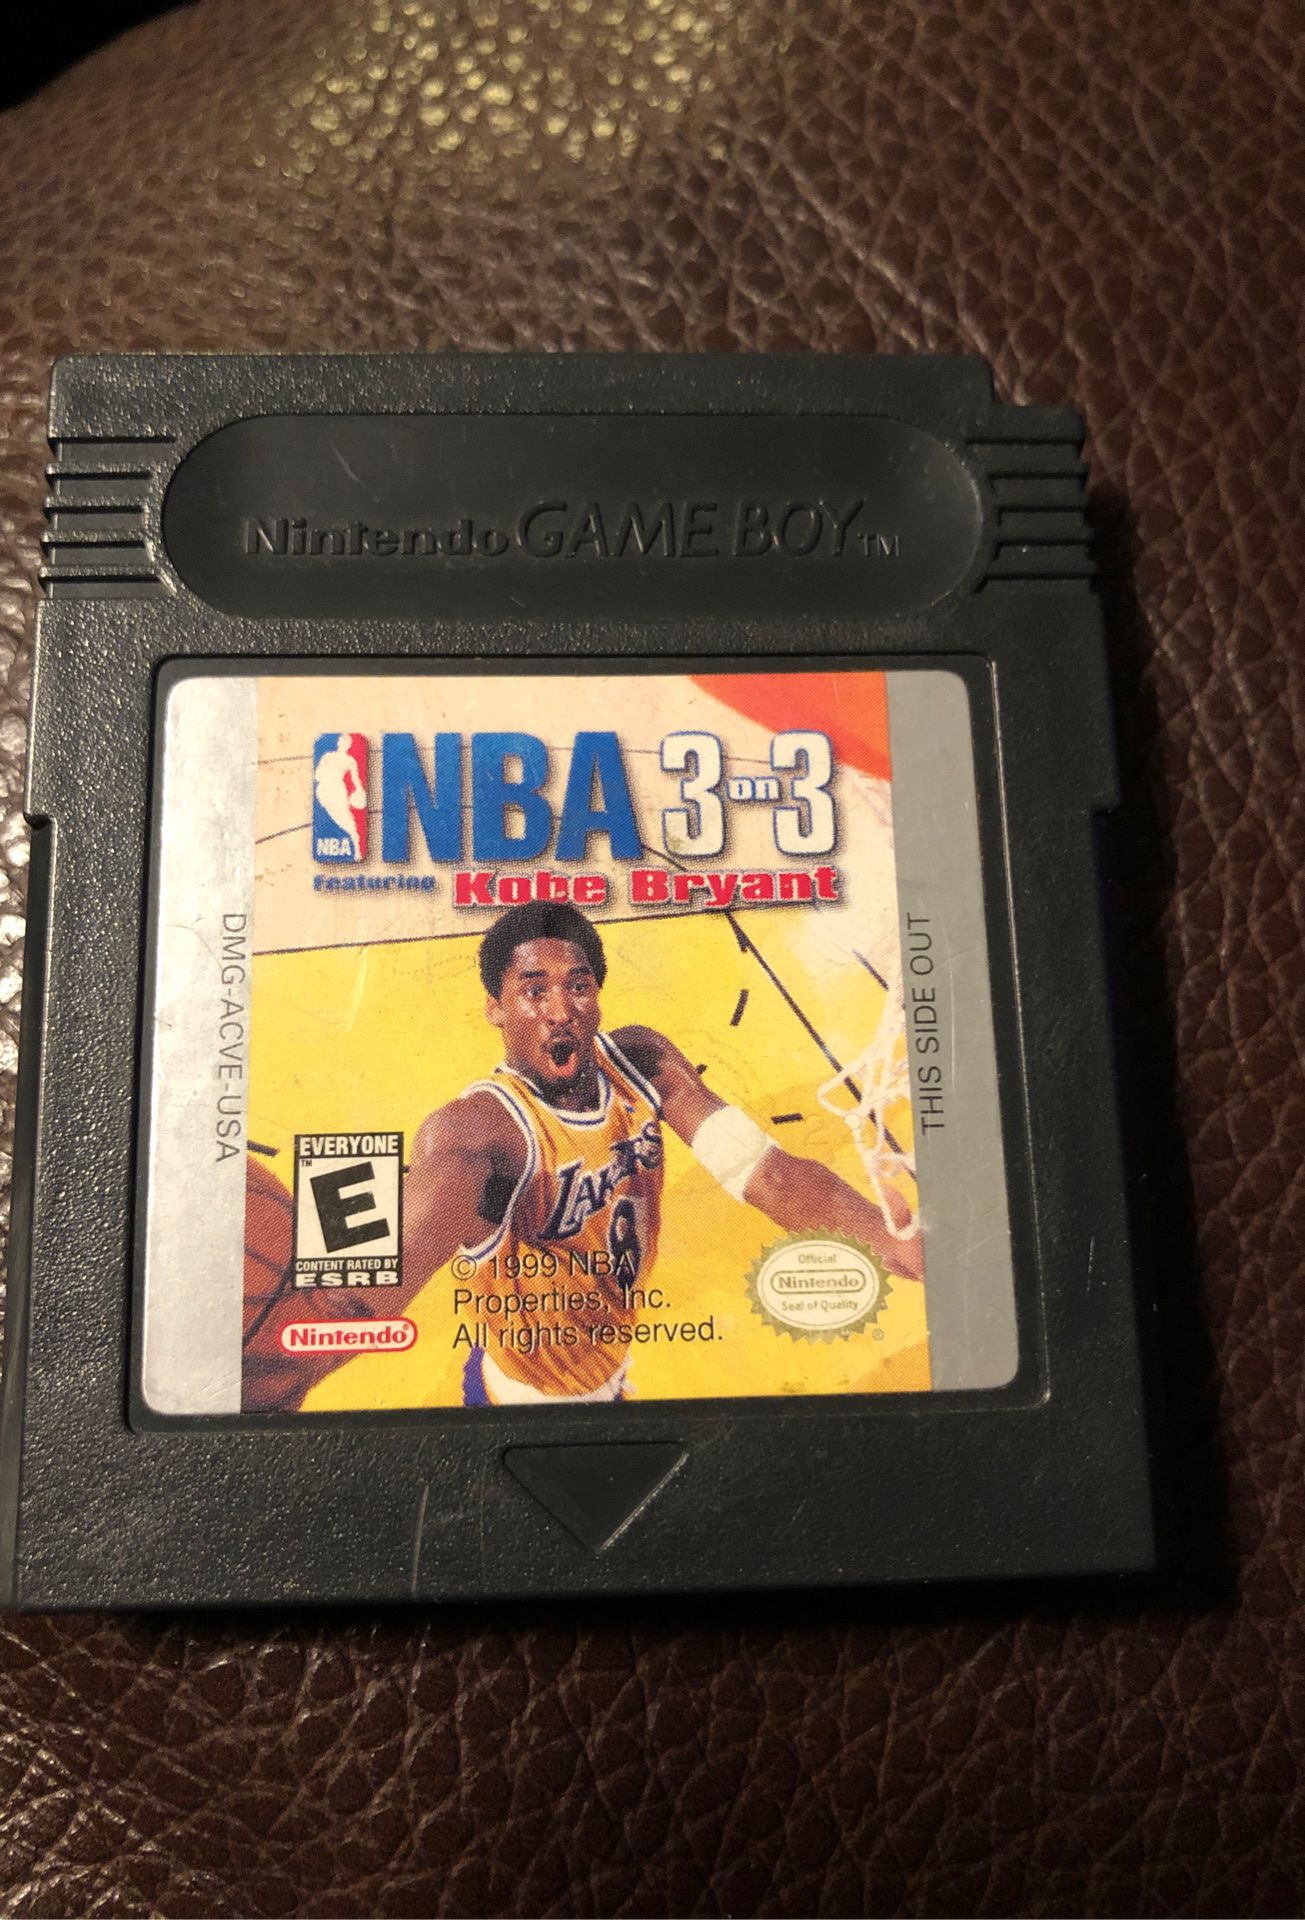 Nintendo Game Boy NBA 3 on 3 Kobe Bryant